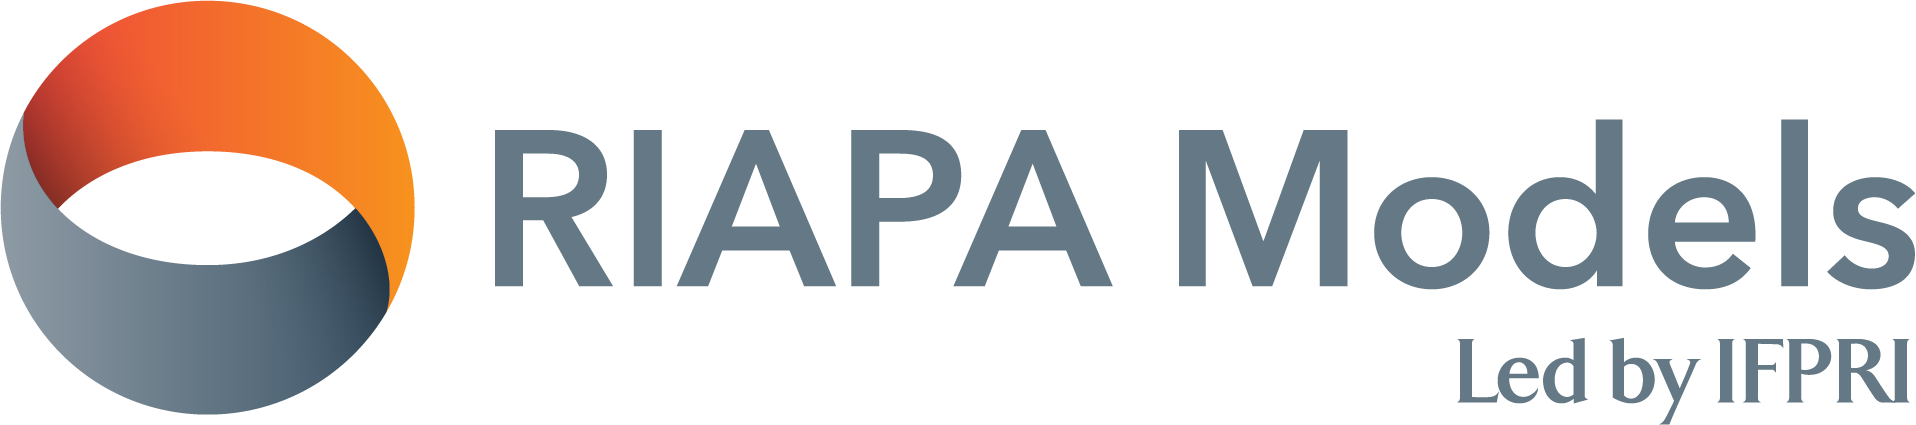 RIAPA logo_final (002)